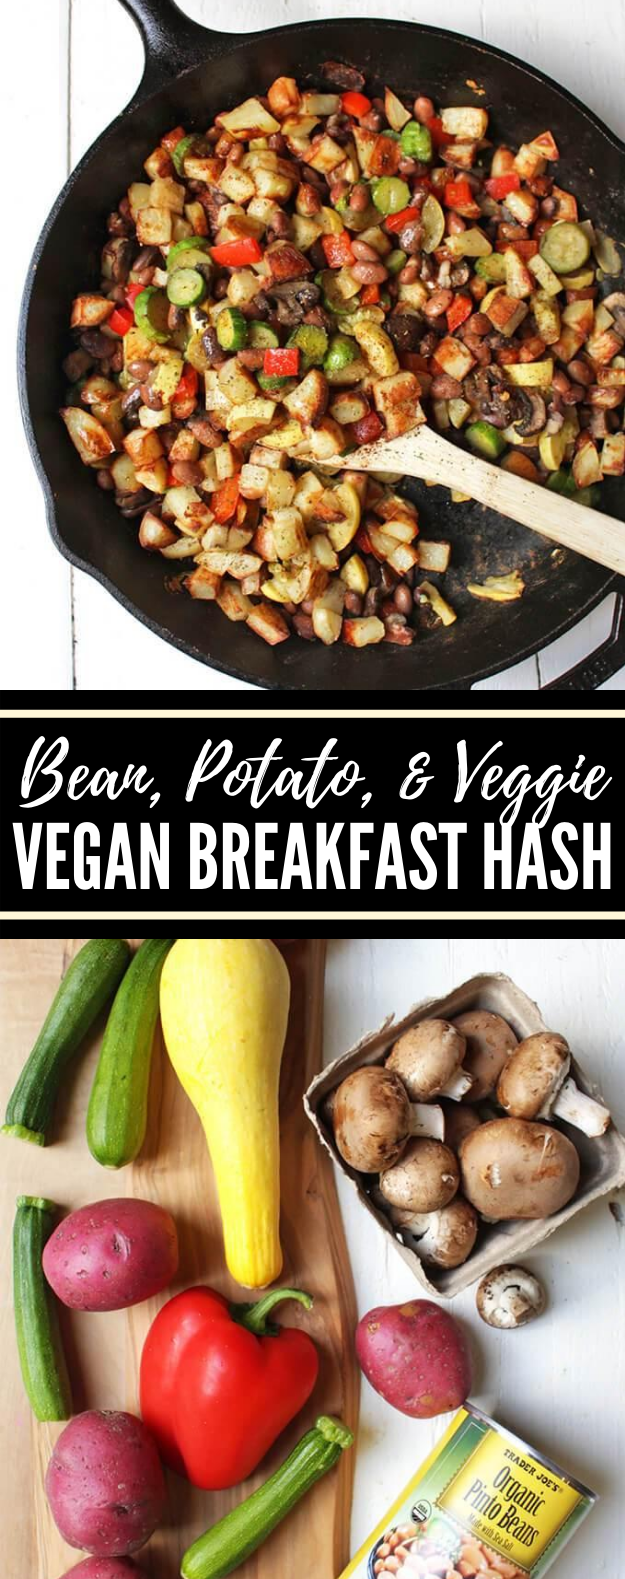 Bean, Potato, & Veggie Vegan Breakfast Hash #vegetarian #recipes #breakfast #vegetables #vegan